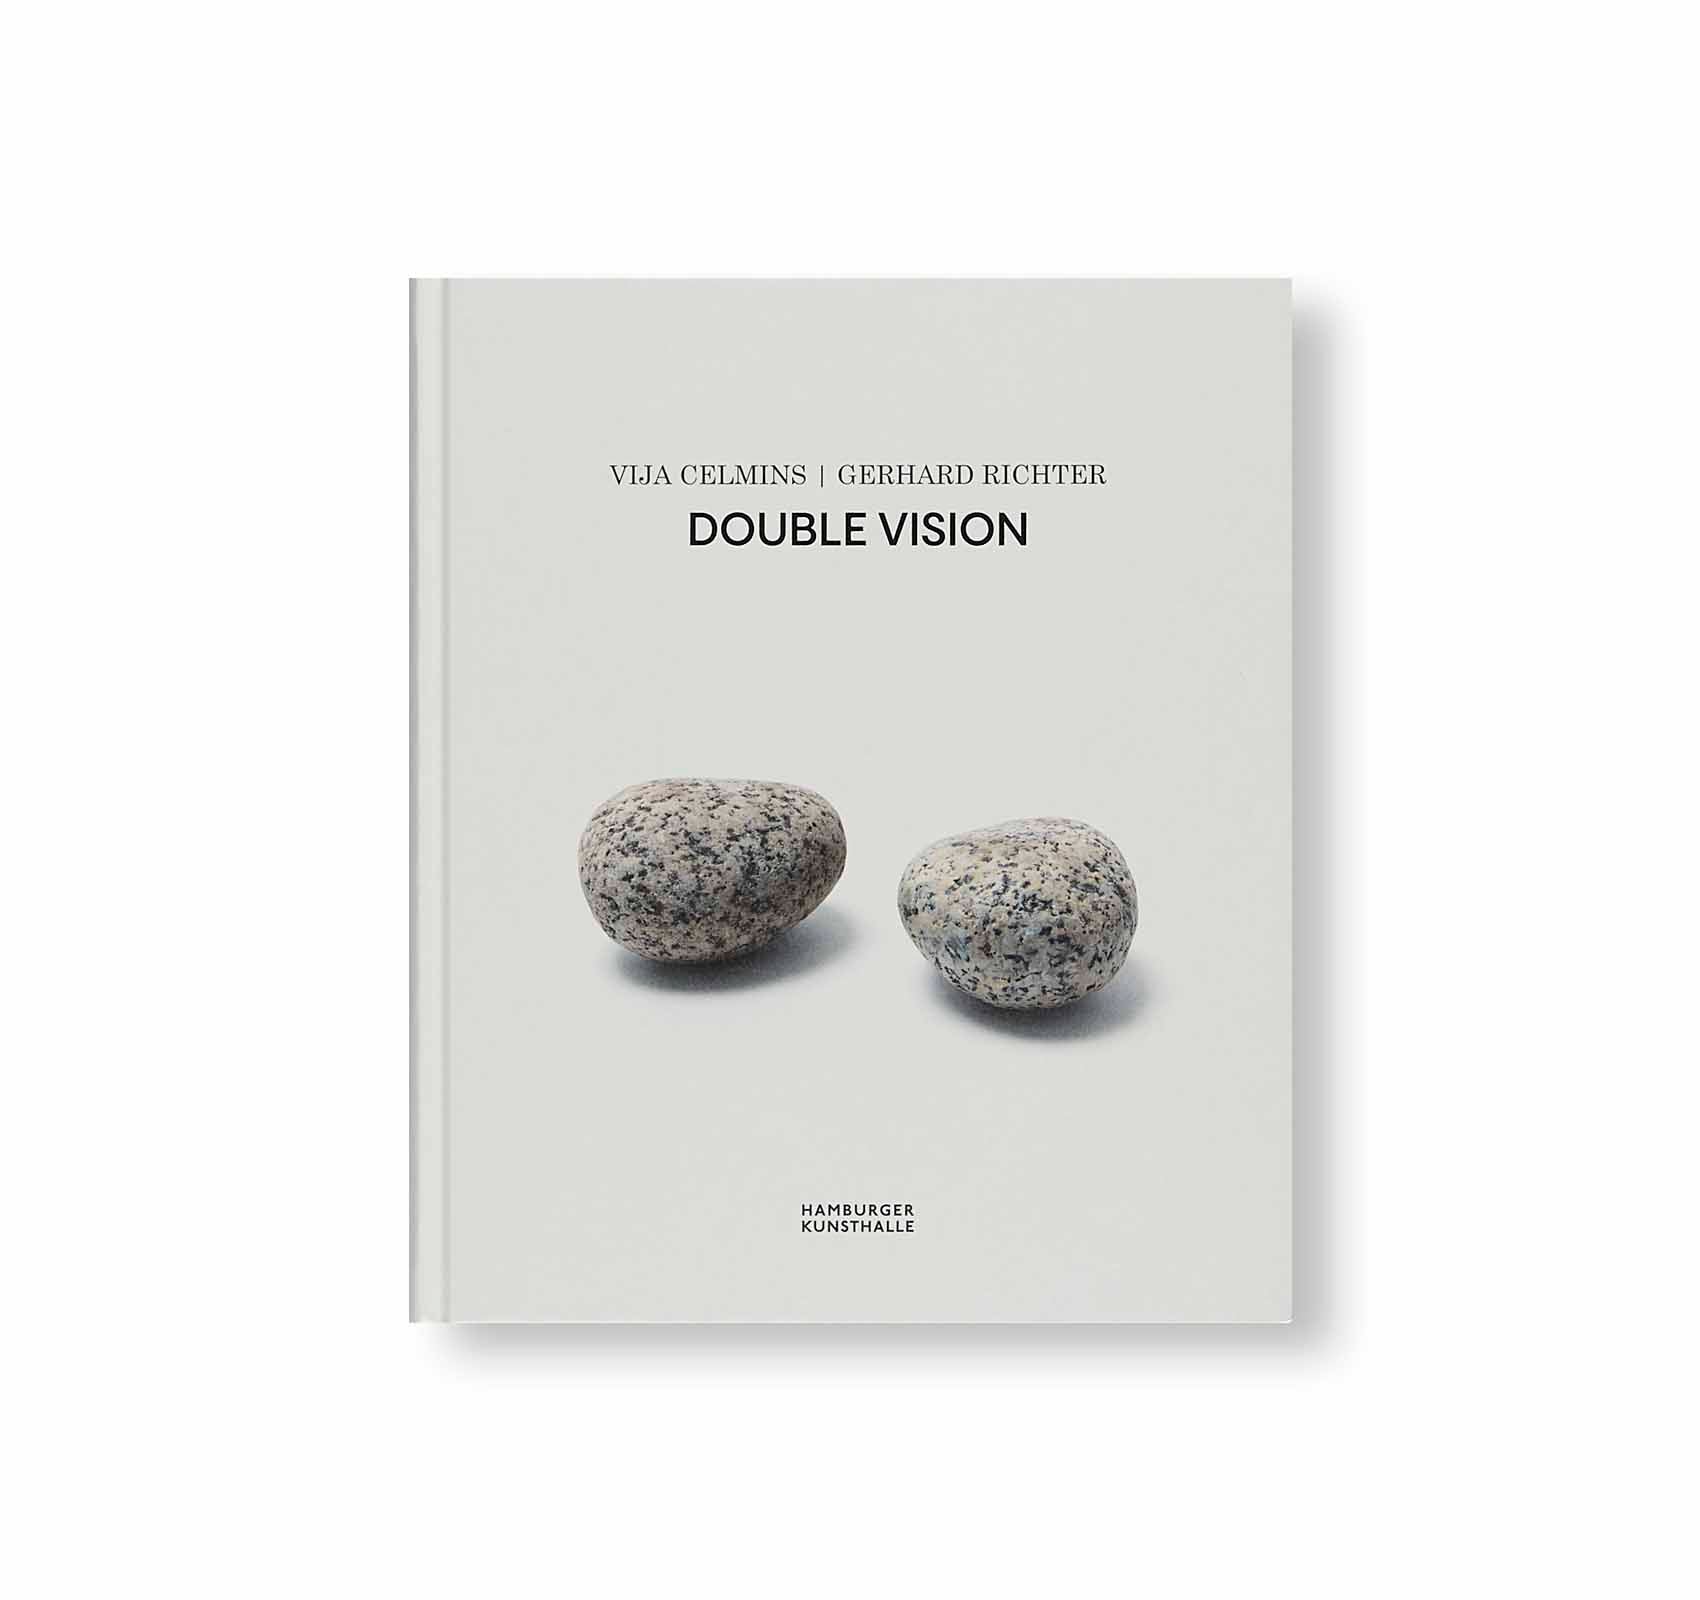 DOUBLE VISION by Vija Celmins, Gerhard Richter